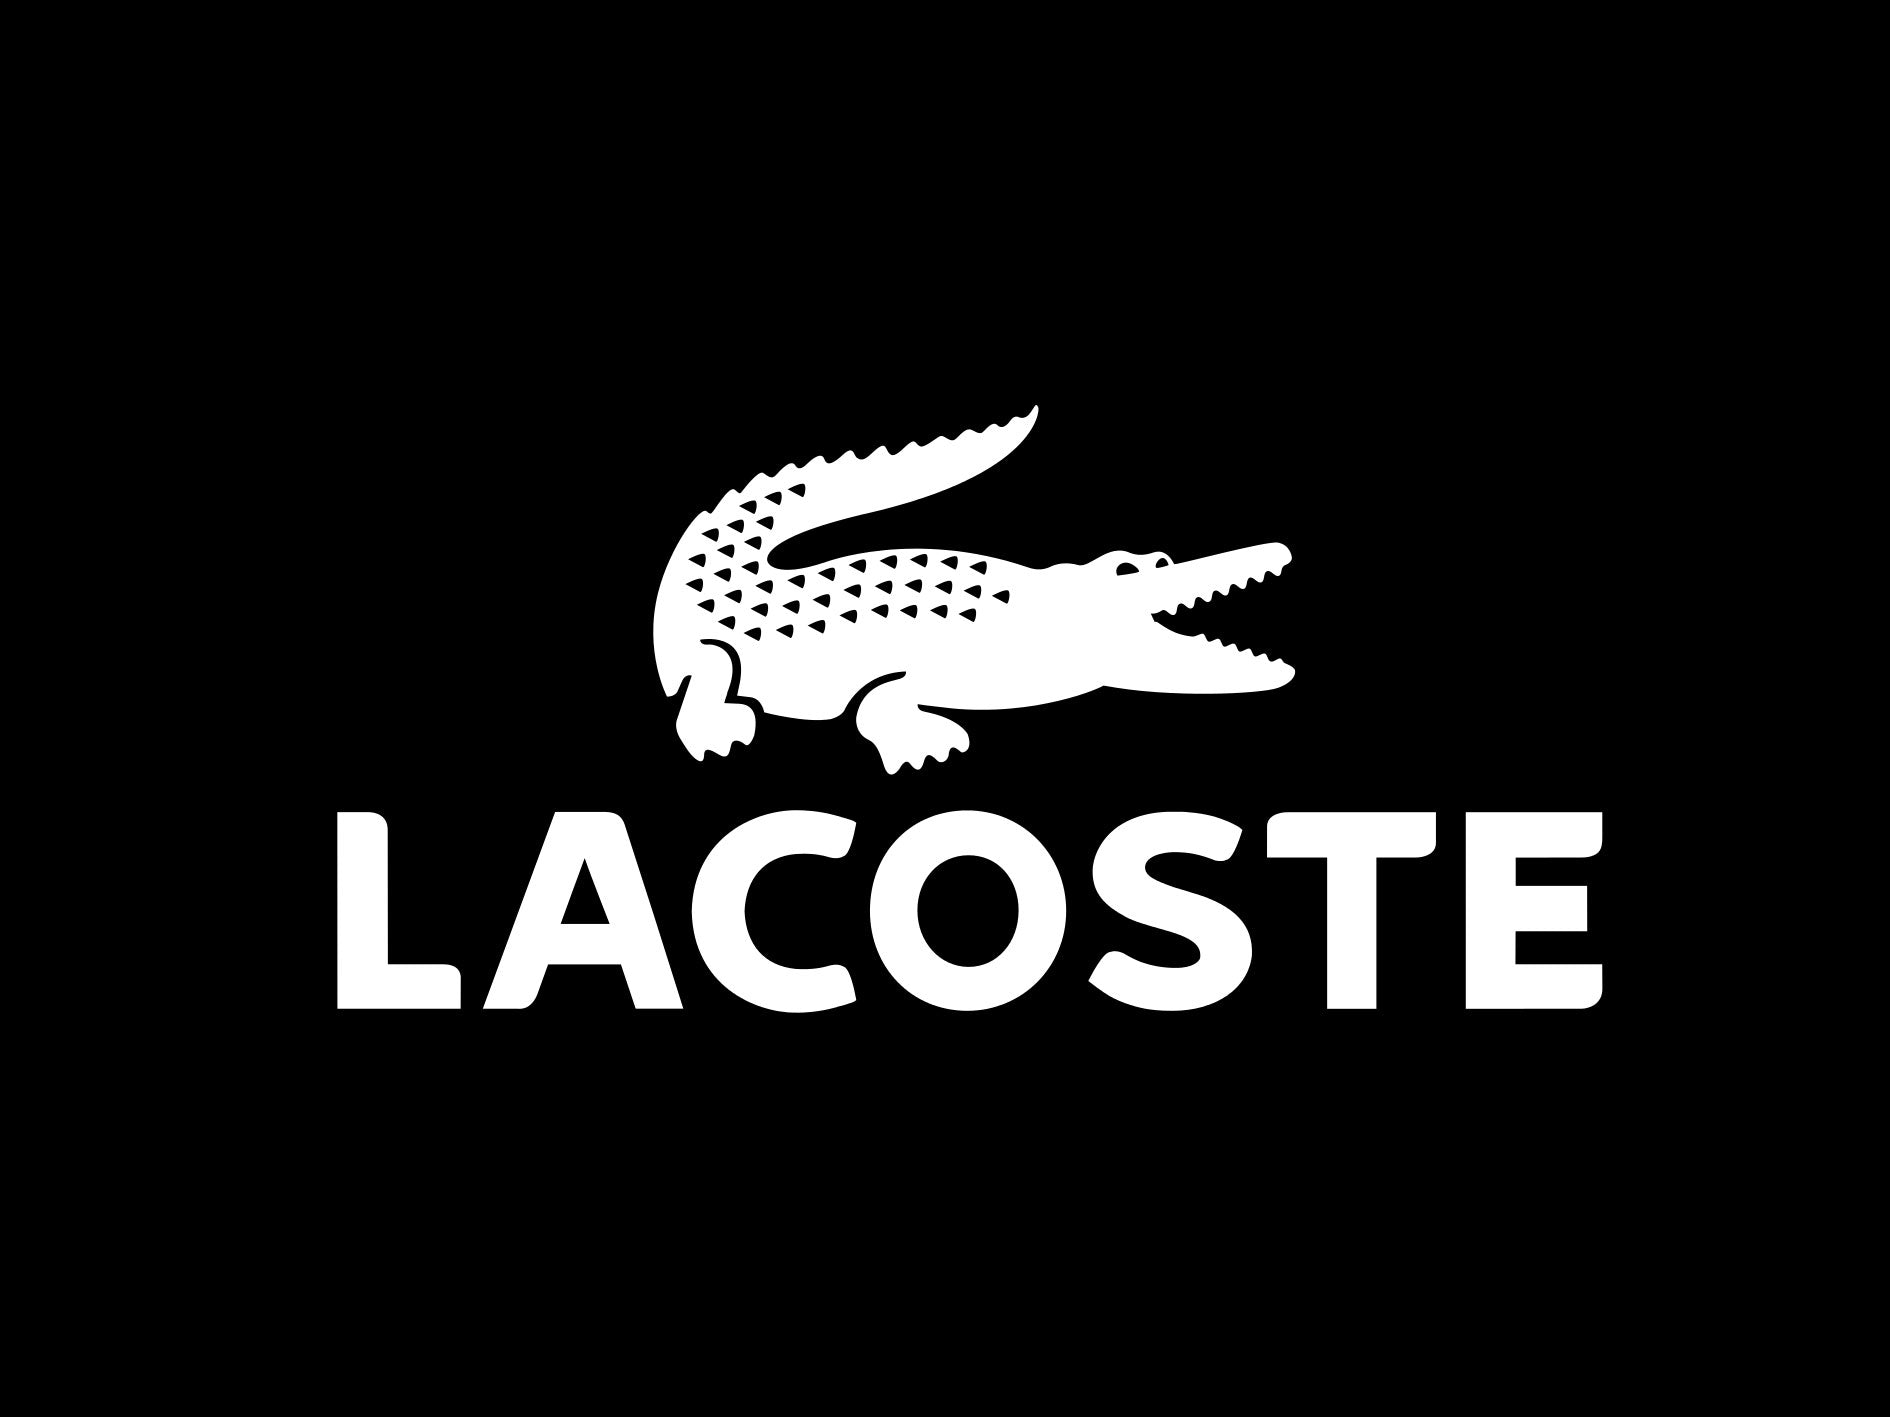 Lacoste sticker thermocollant – Customisation Club